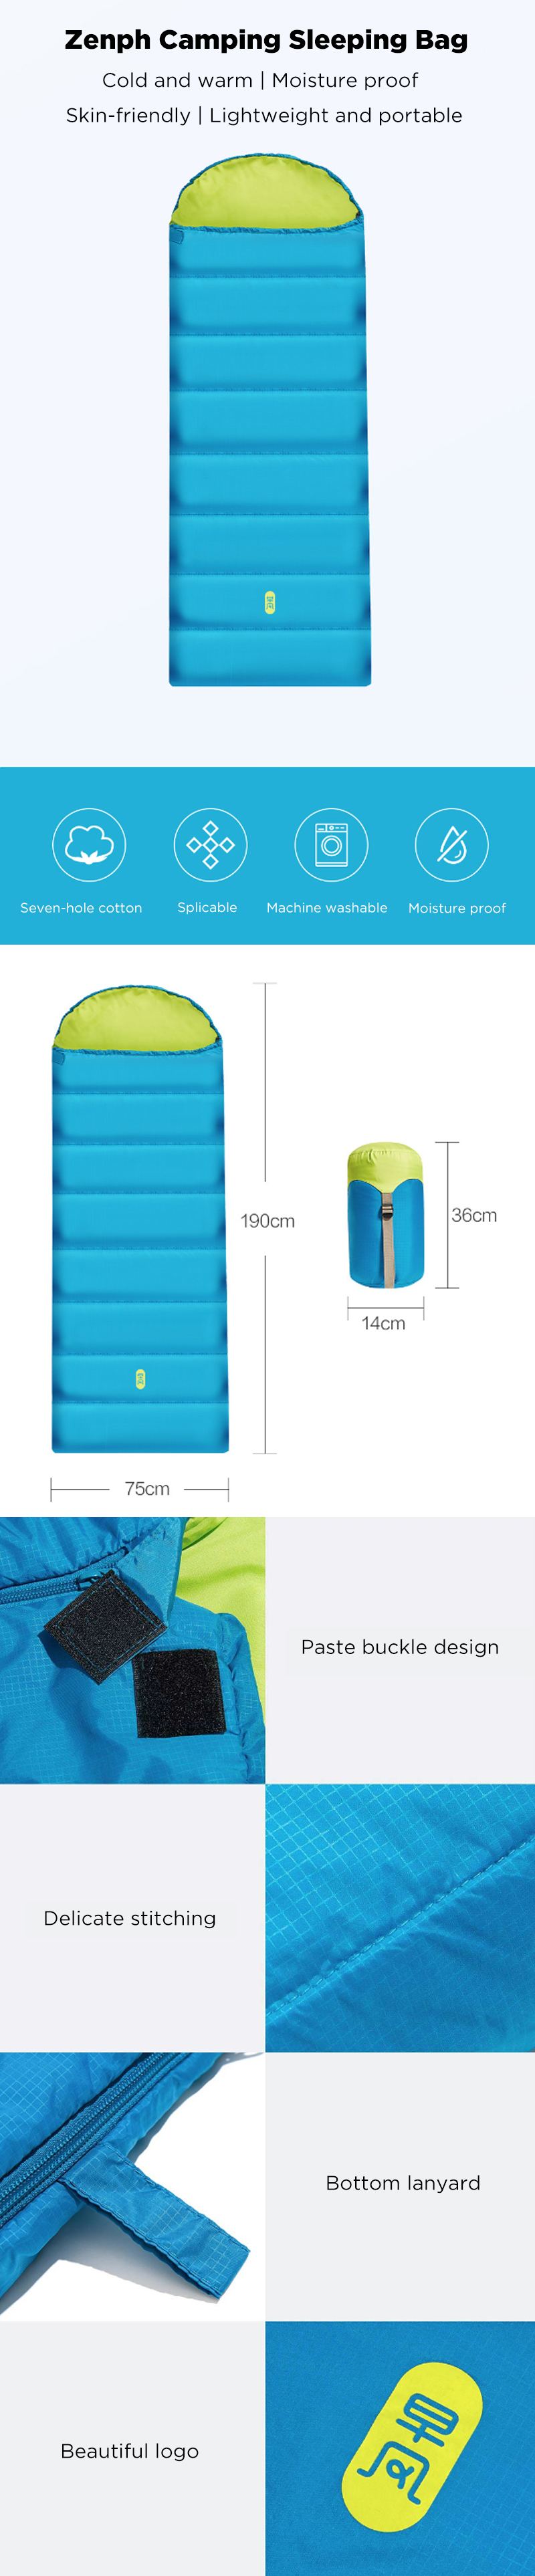 Zenph-HW050201-Portable-Sleeping-Bag-Seven-hole-Cotton-Single-Sleep-Pad-With-Cap-Outdoor-Camping-fro-1531948-1